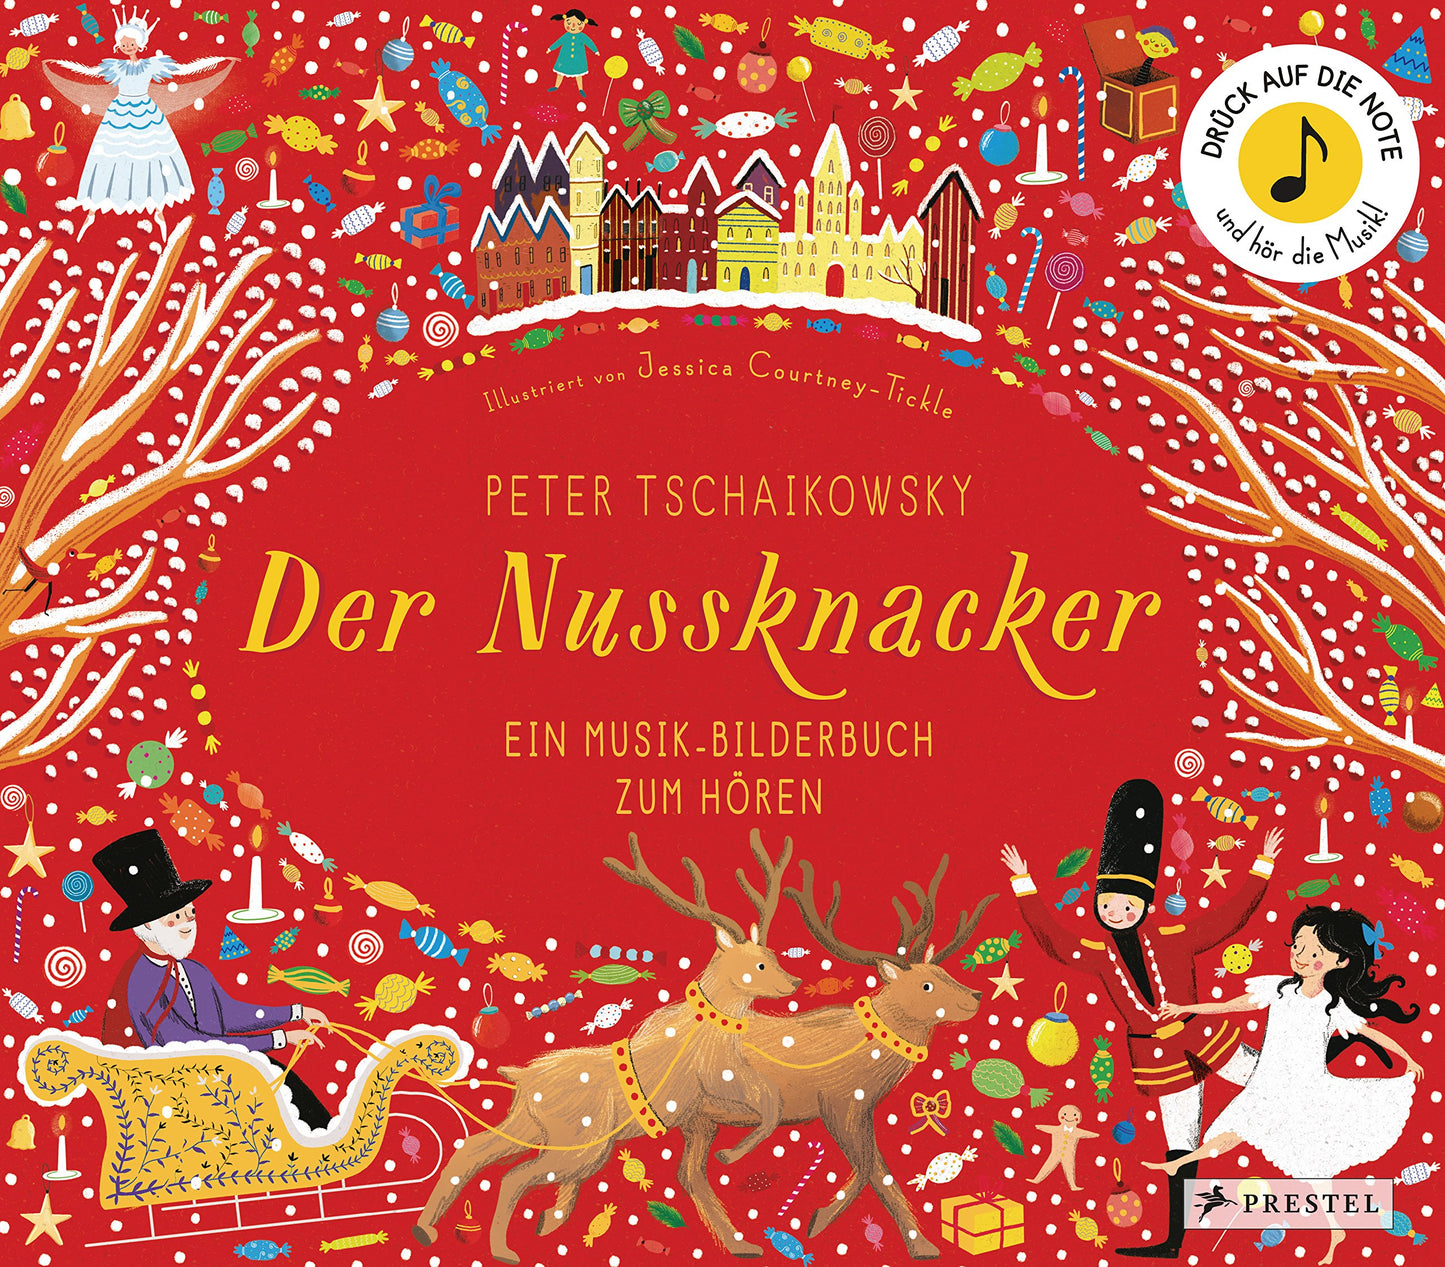 Der Nussknacker - Peter Tschaikowsky